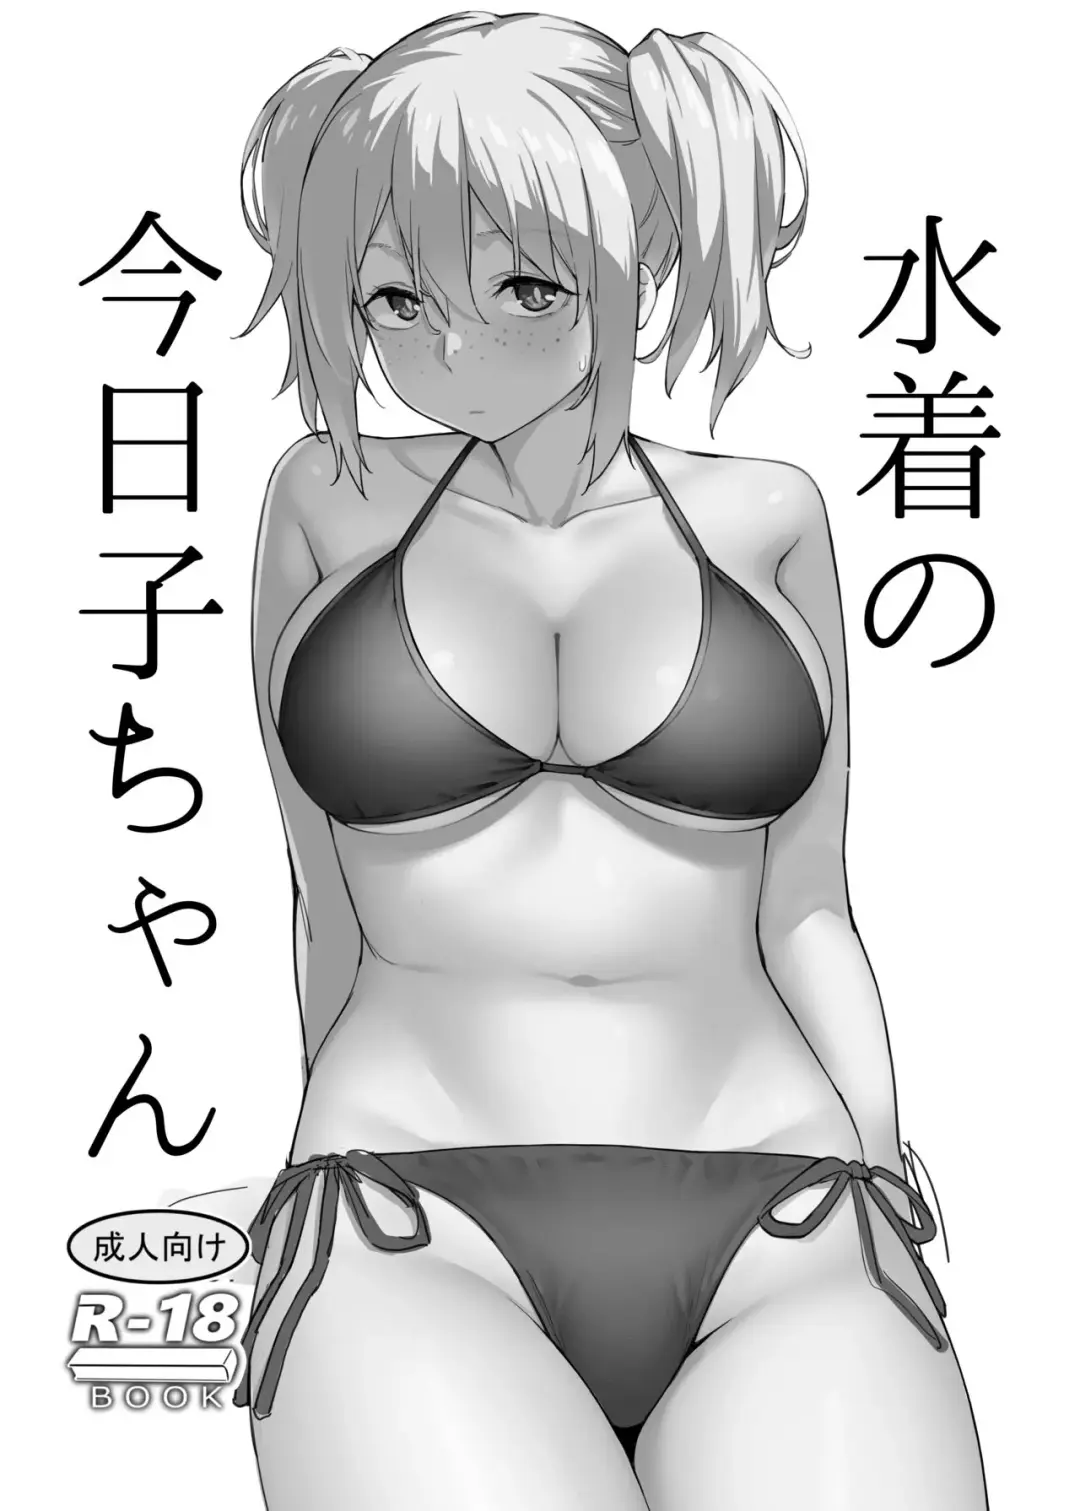 Read [Lewis] Kyouko-chan's swimsuit - Fhentai.net